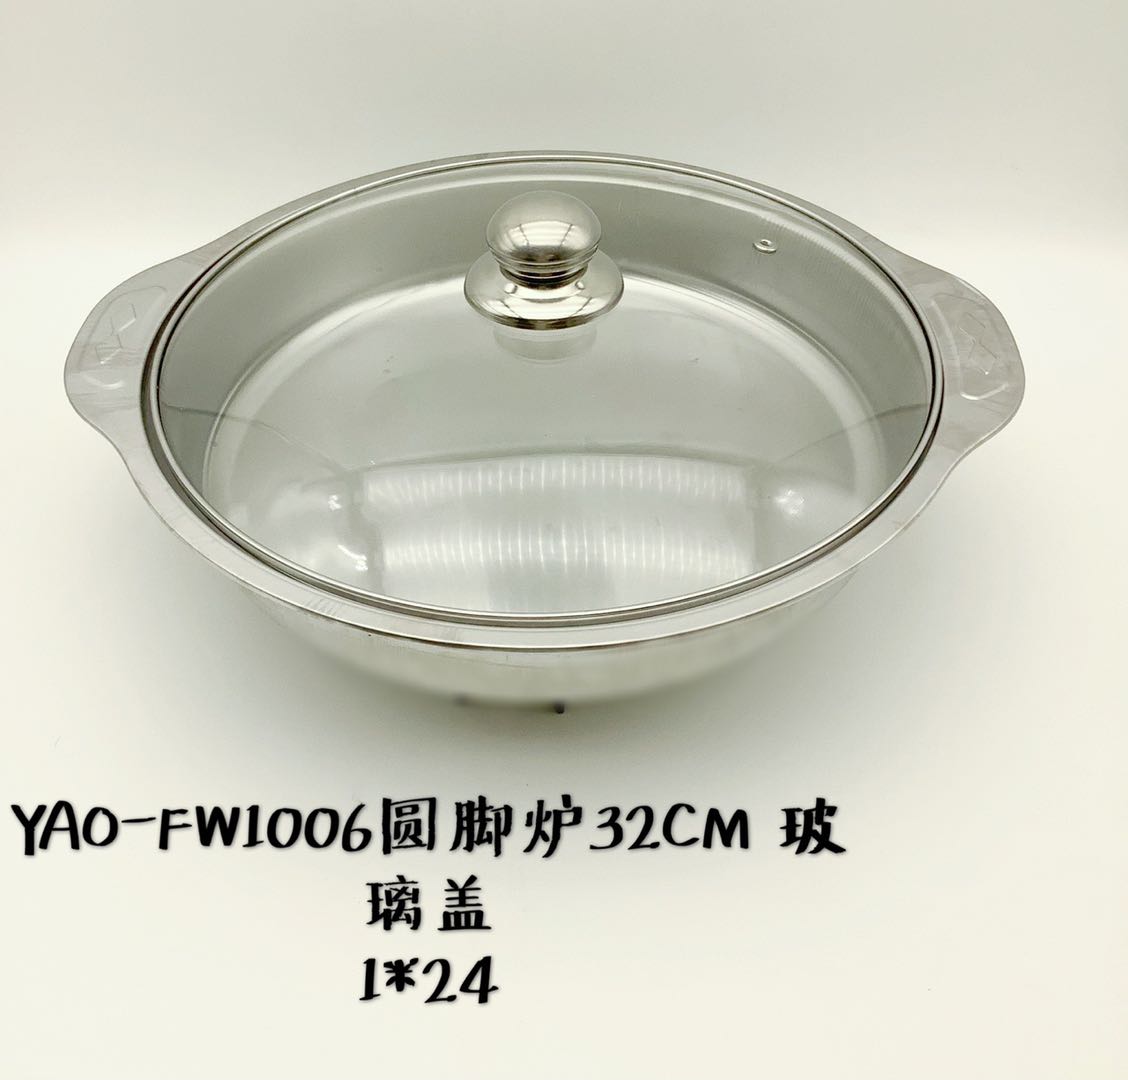 YAO-FW1006 圆脚炉32cm(玻璃盖)